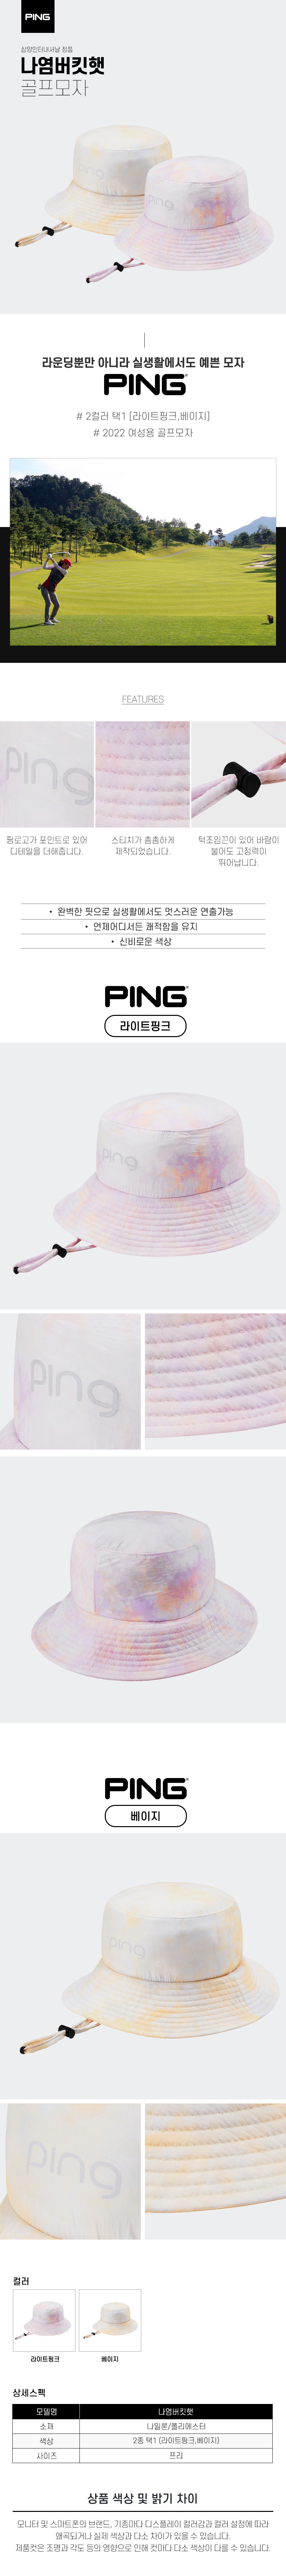 ping_w_printing_bucket_hat.jpg